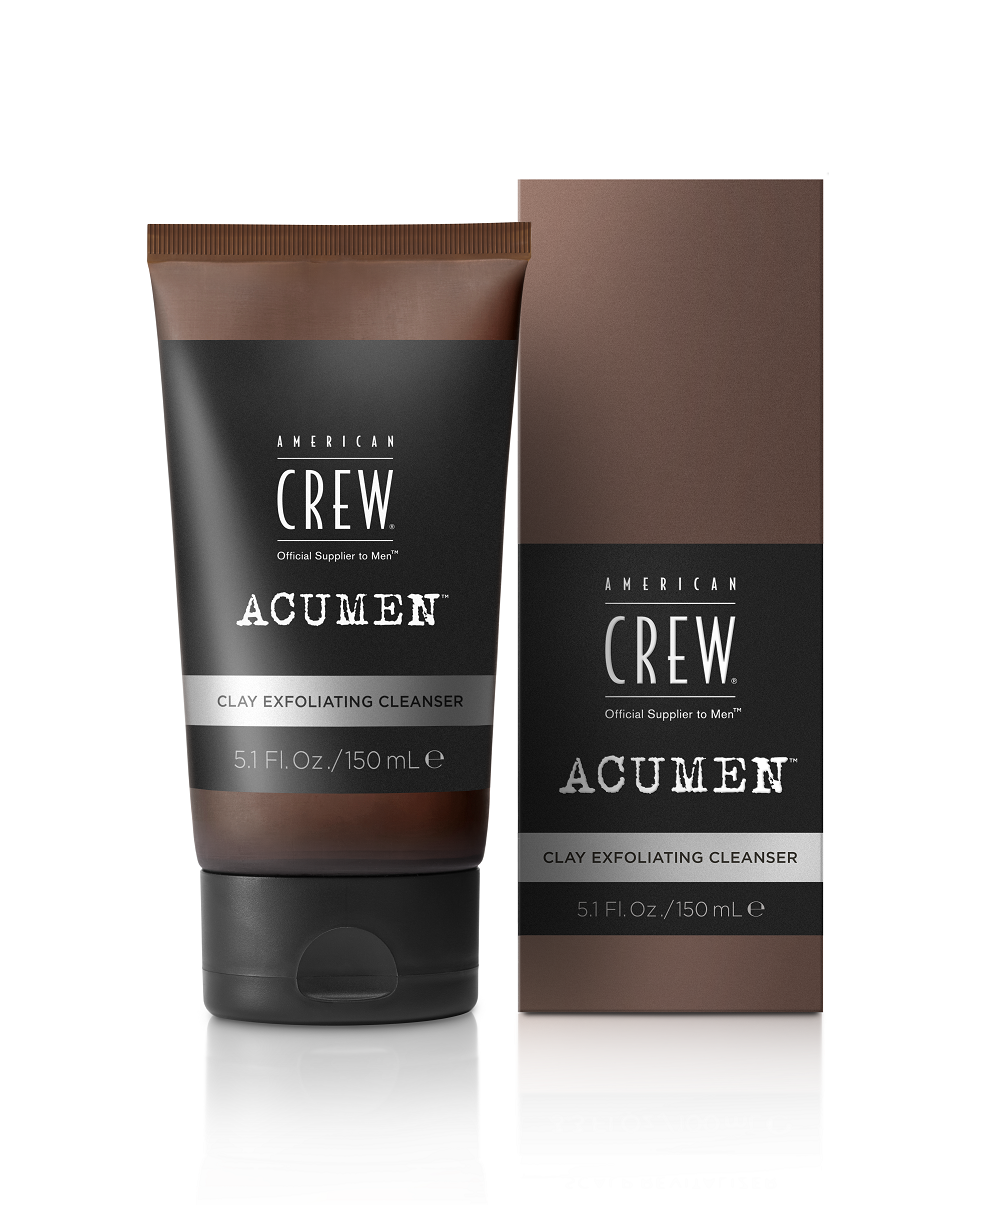 American Crew - Acumen - Clay exfoliating cleanser